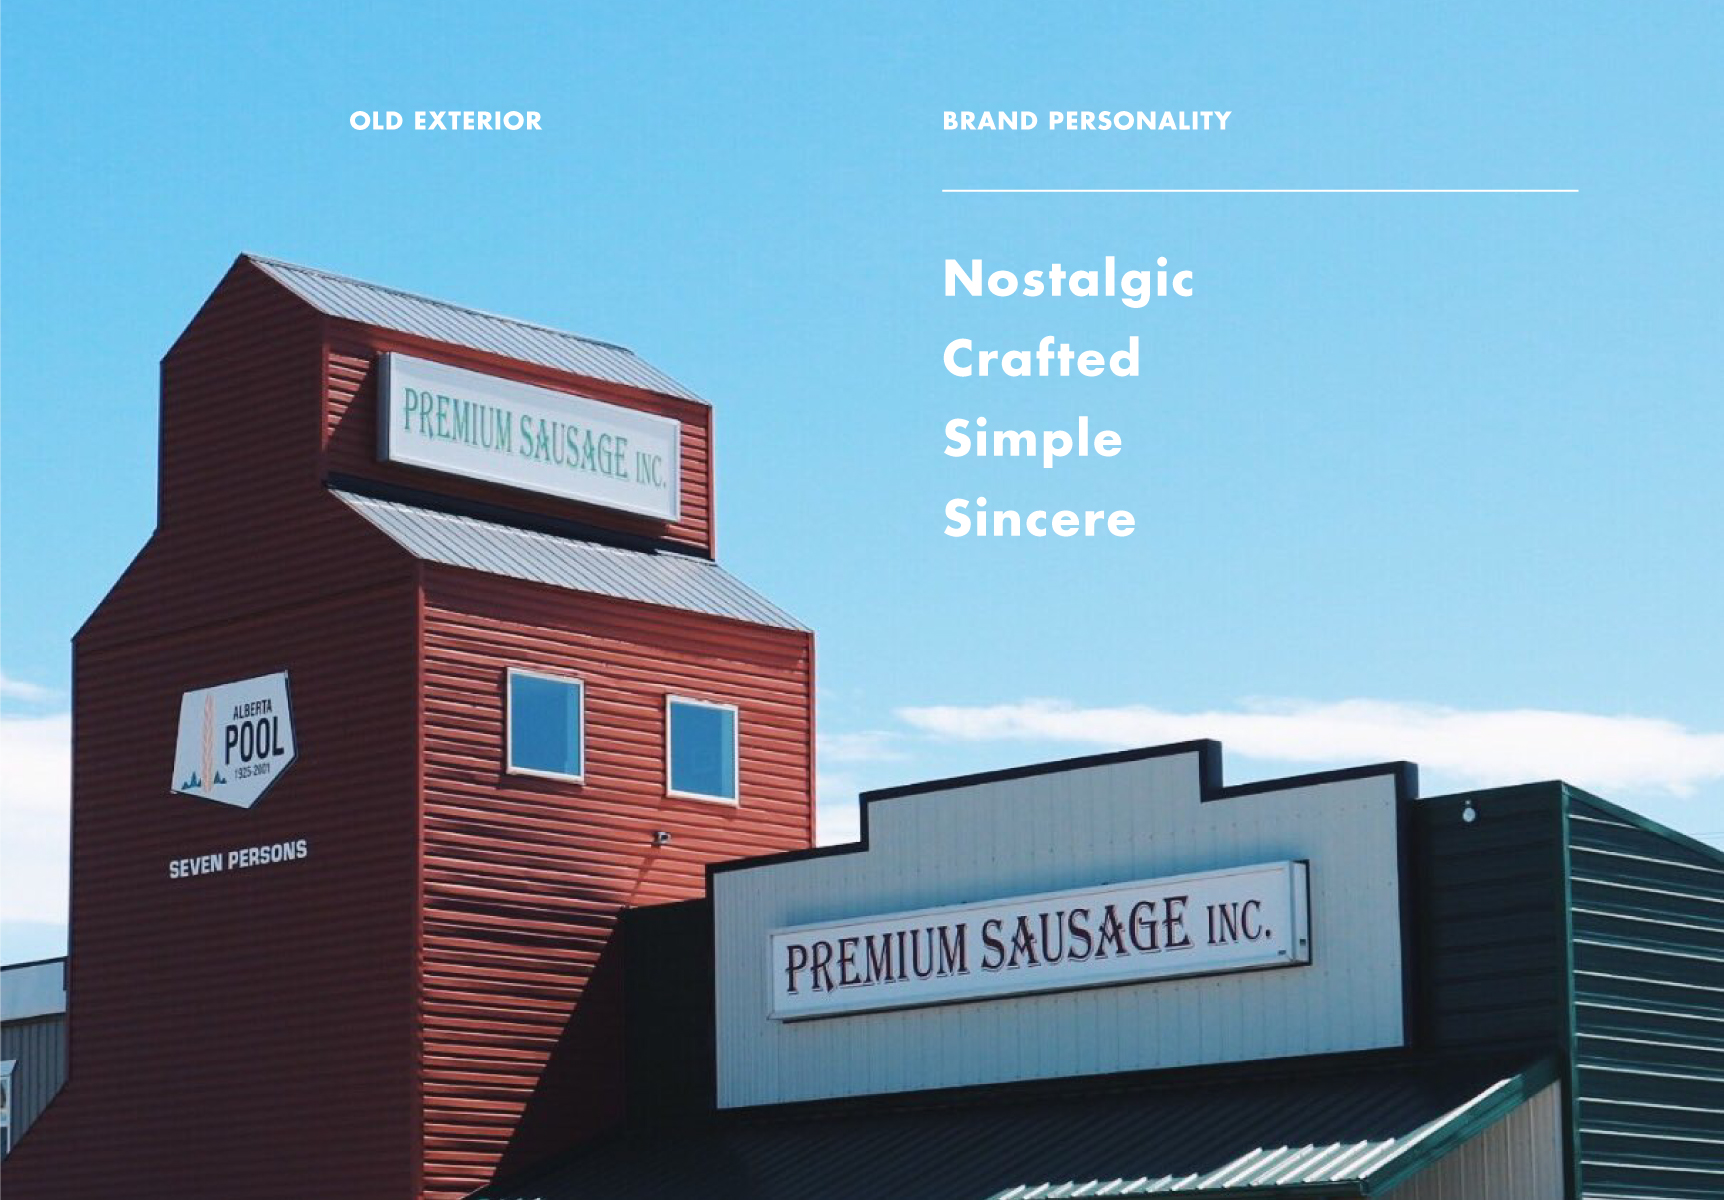 Premium Sausage old exterior. Premium Sausage brand personality: Nostalgic, Crafted, Simple, Sincere